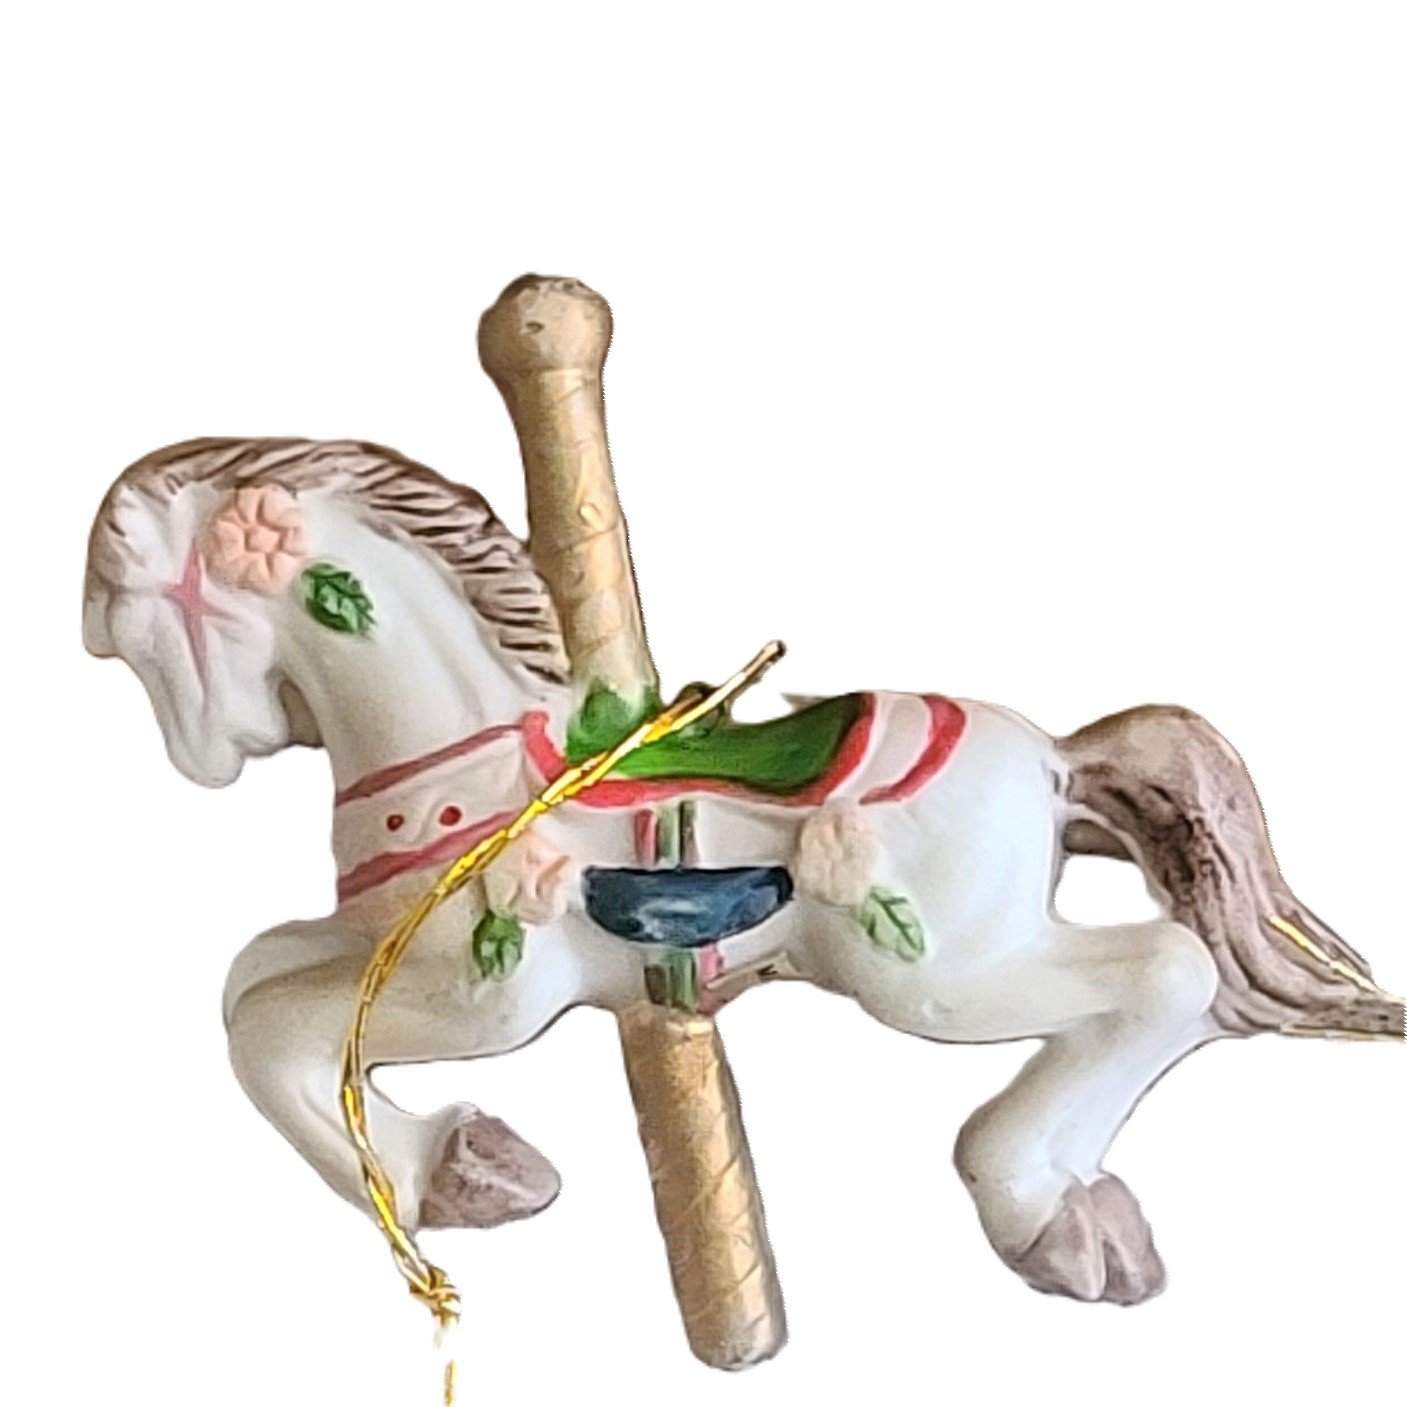 Bisque cermaic vintage carousel horse ornaments - set of 2